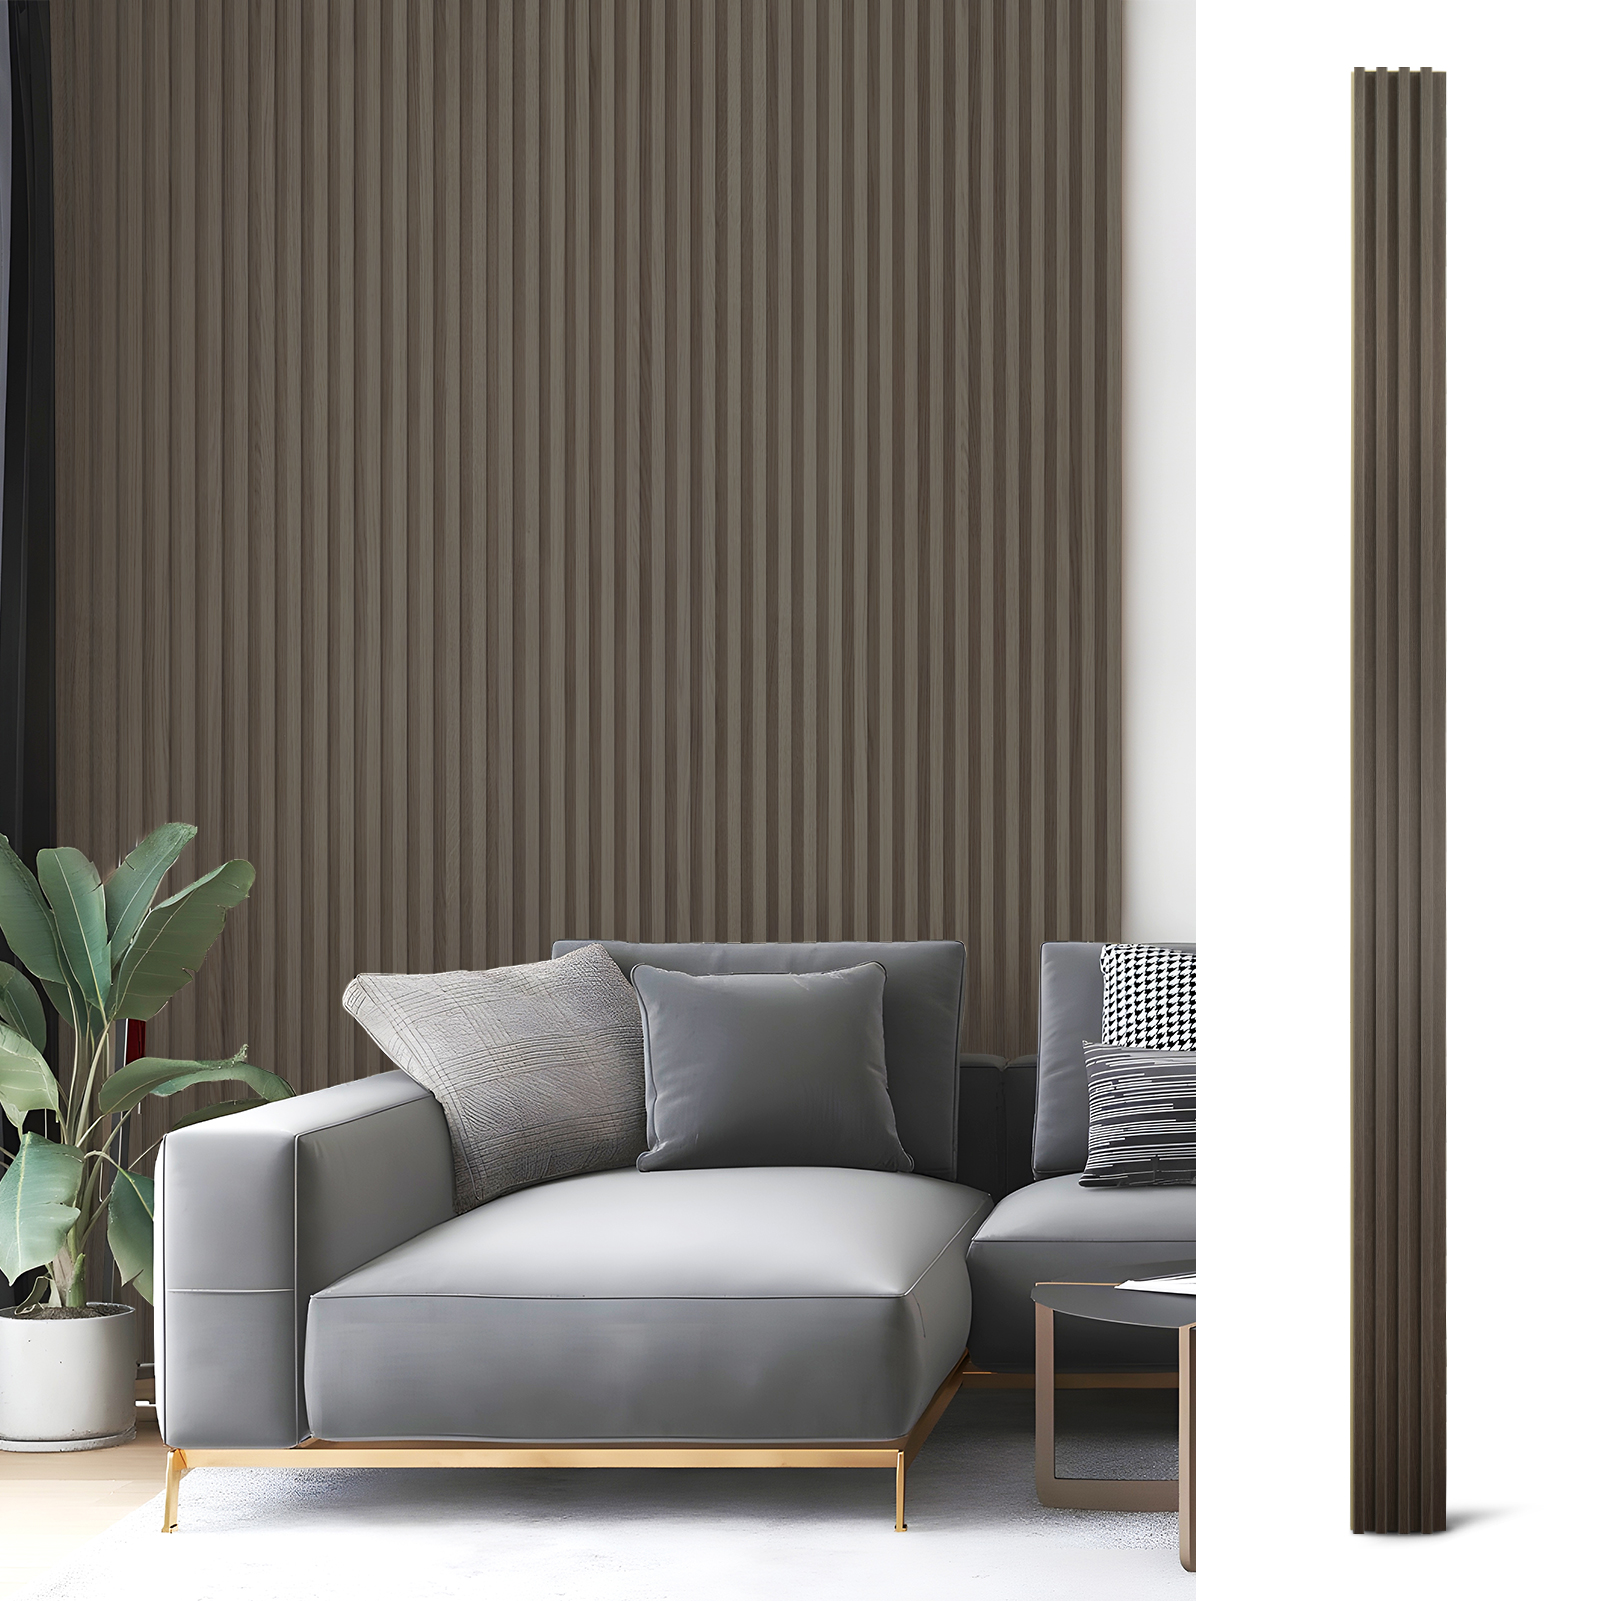 A19003BK12-Art3d Stick-on Acoustic Panels, Sound Proof Wall Panels